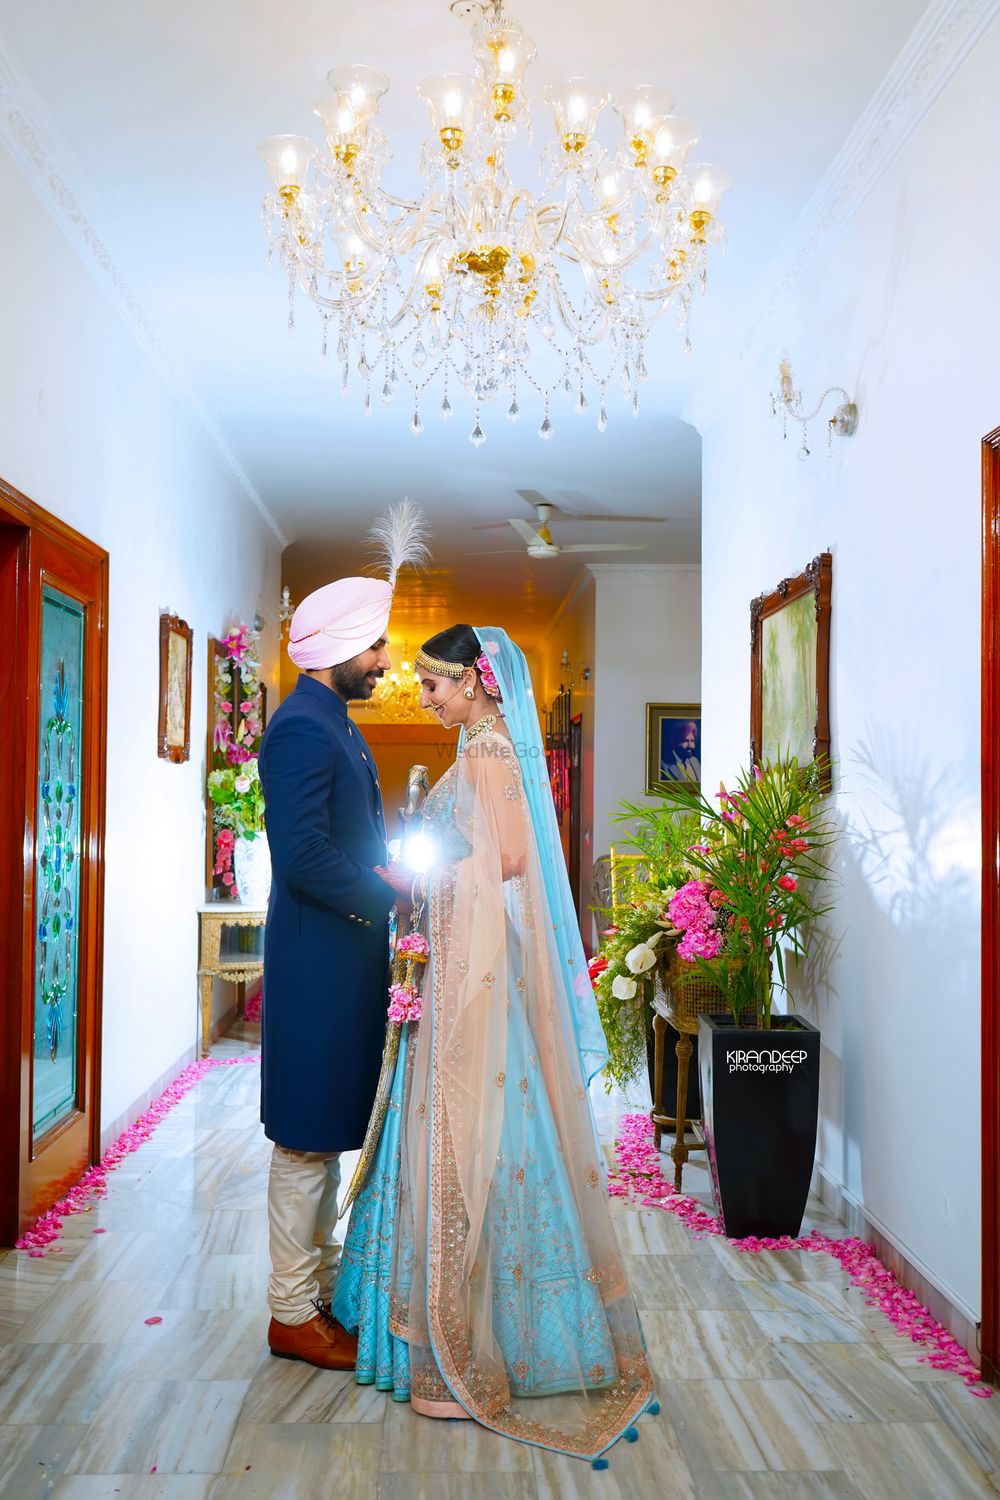 Photo From Fairy tale Wedding - By Kirandeep Photography